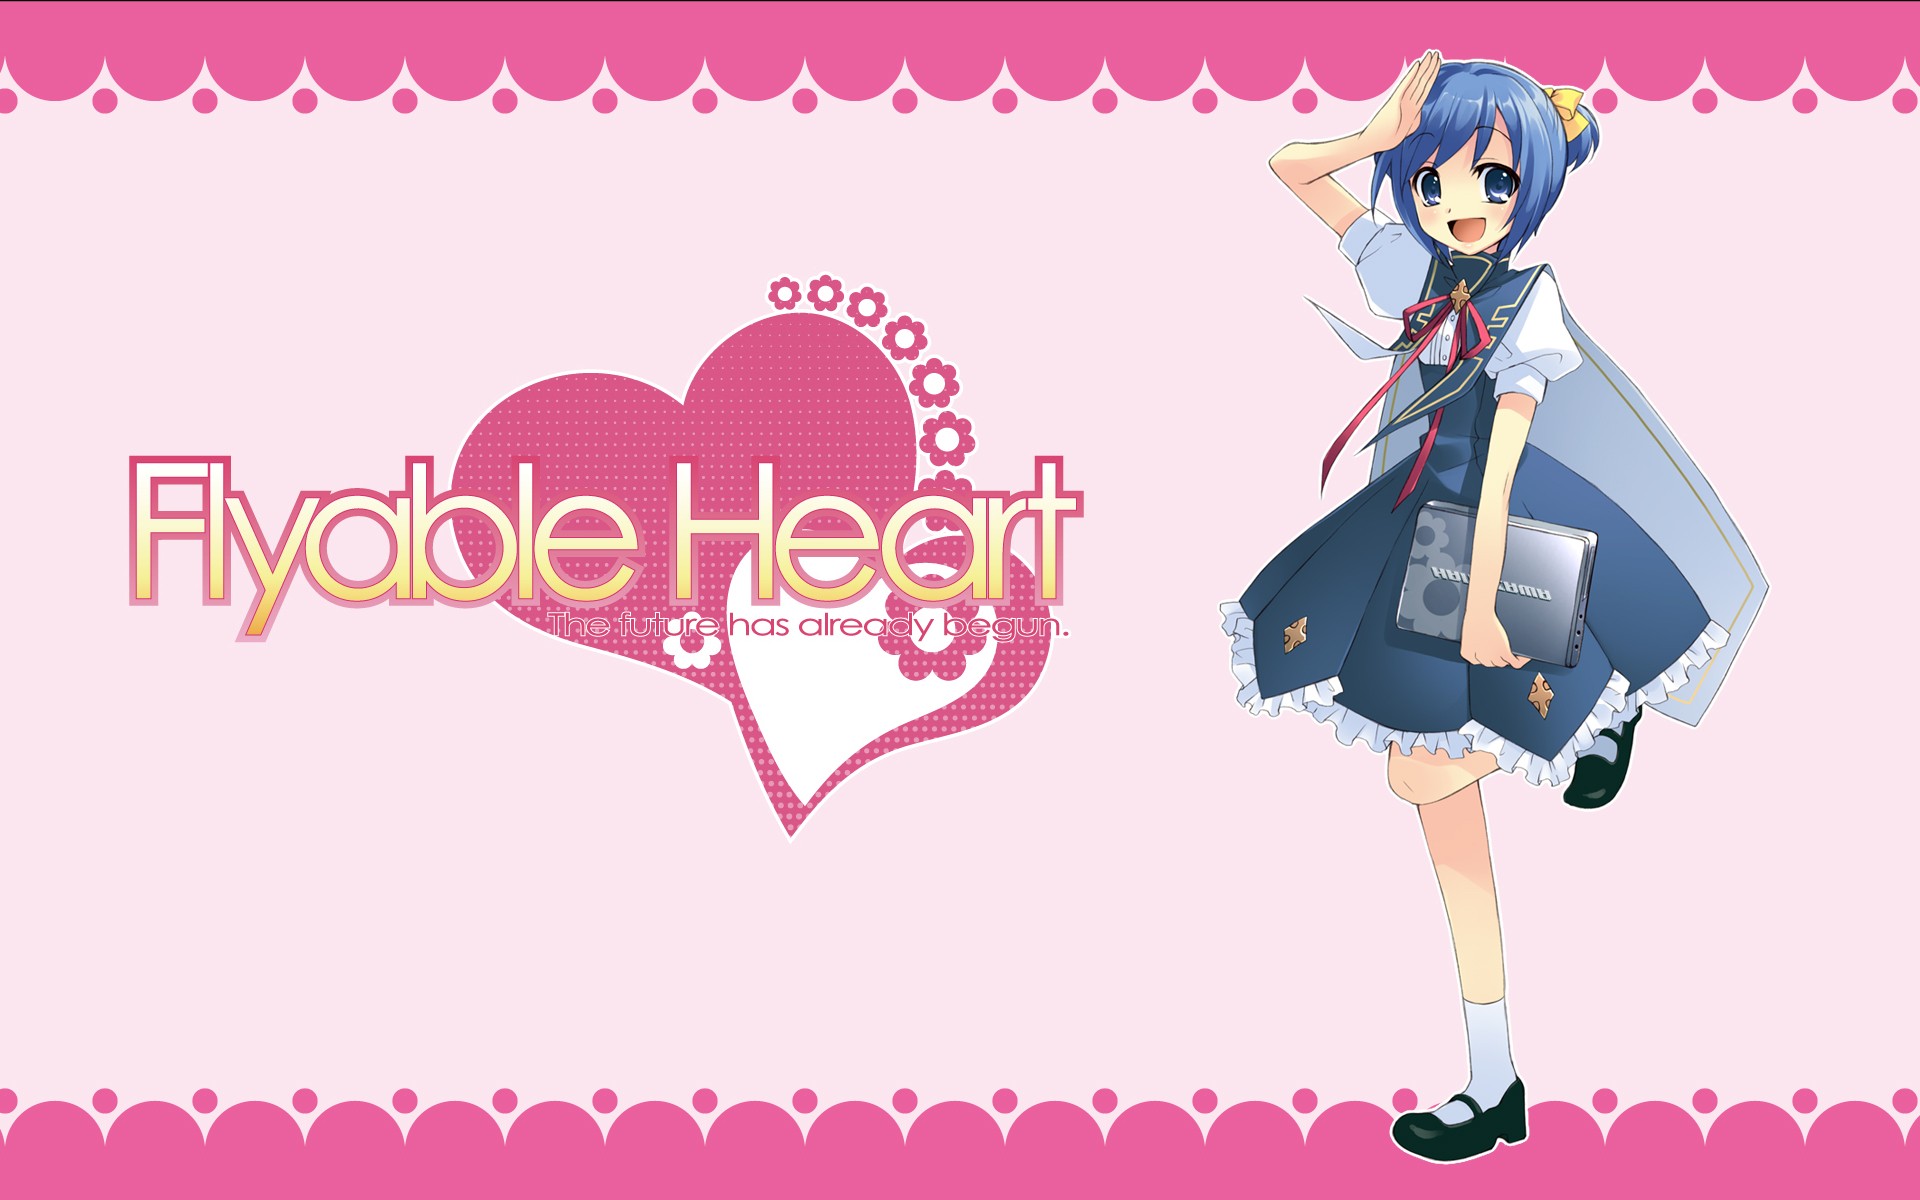 Megumi, seifuku, Flyable Heart, Noiji Itou - desktop wallpaper